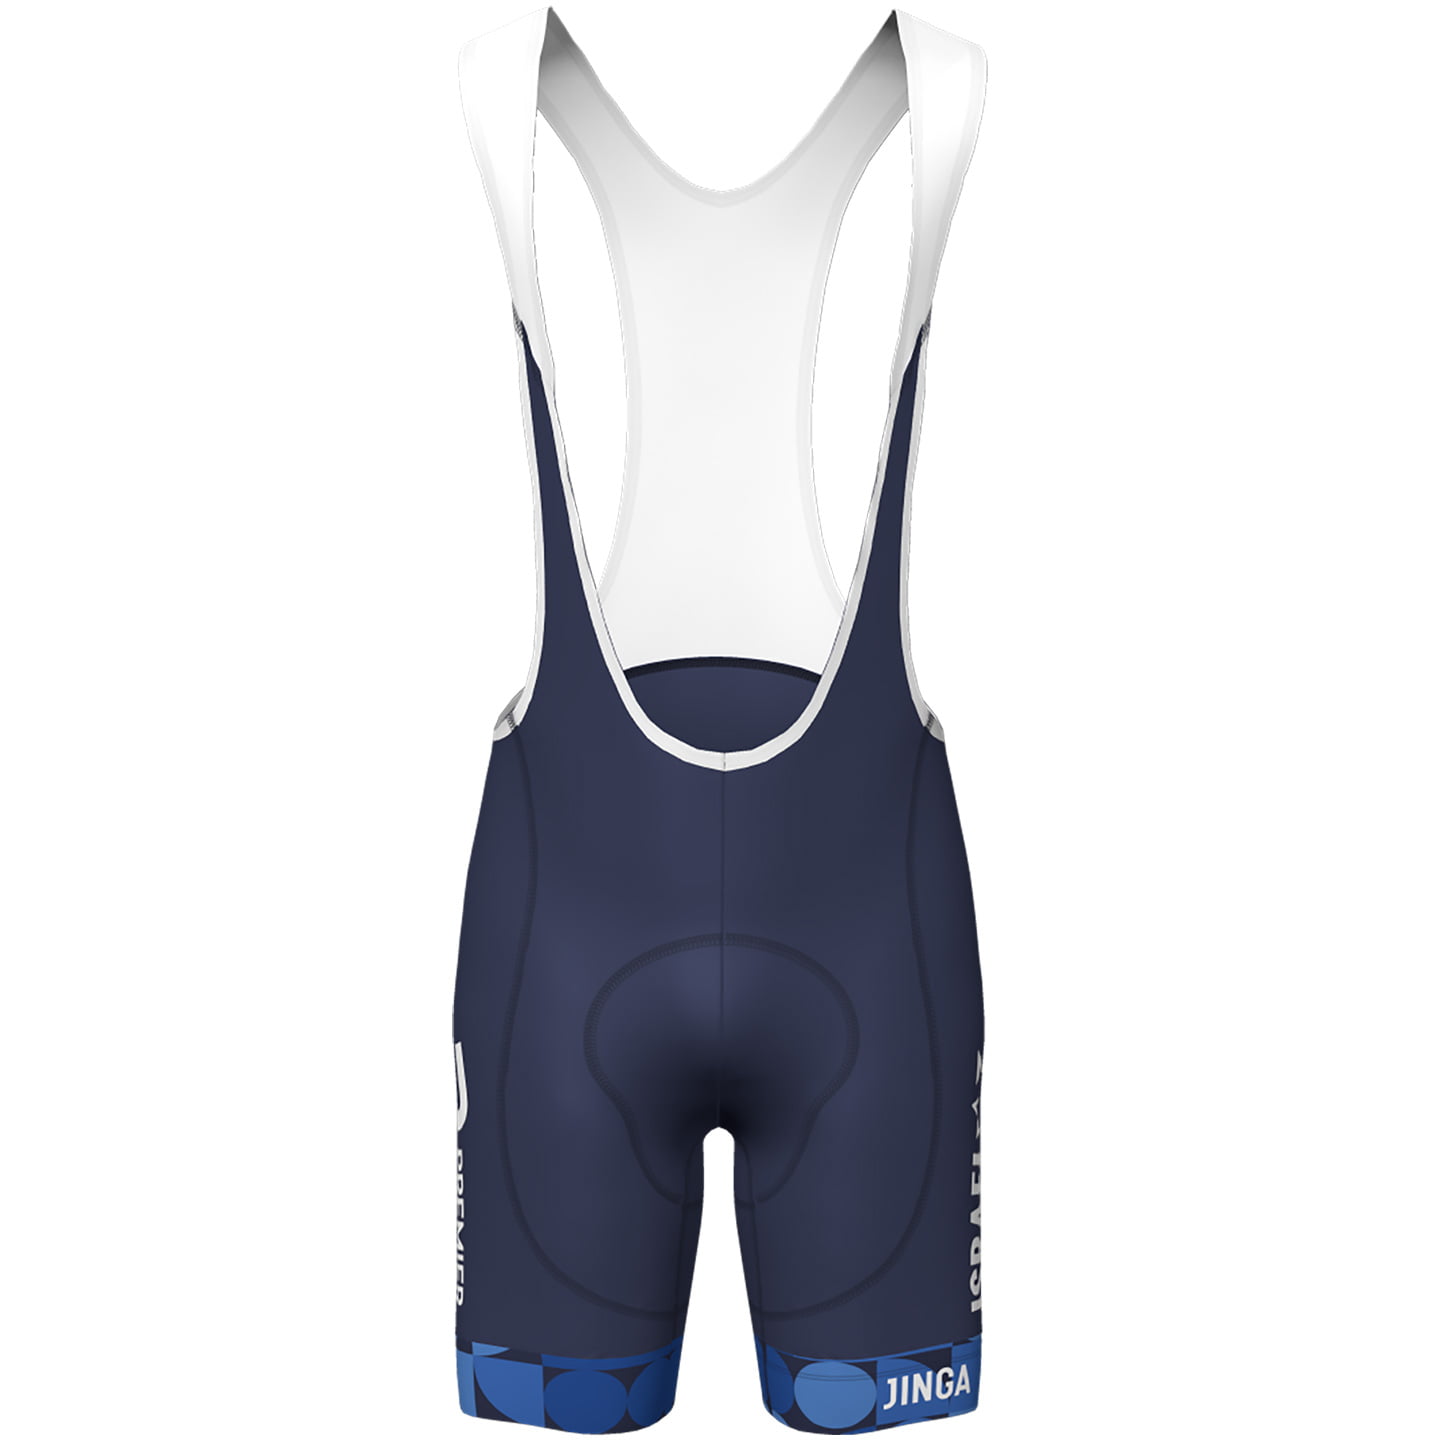 ISRAEL PREMIER TECH 2022 Bib Shorts, for men, size L, Cycle shorts, Cycling clothing